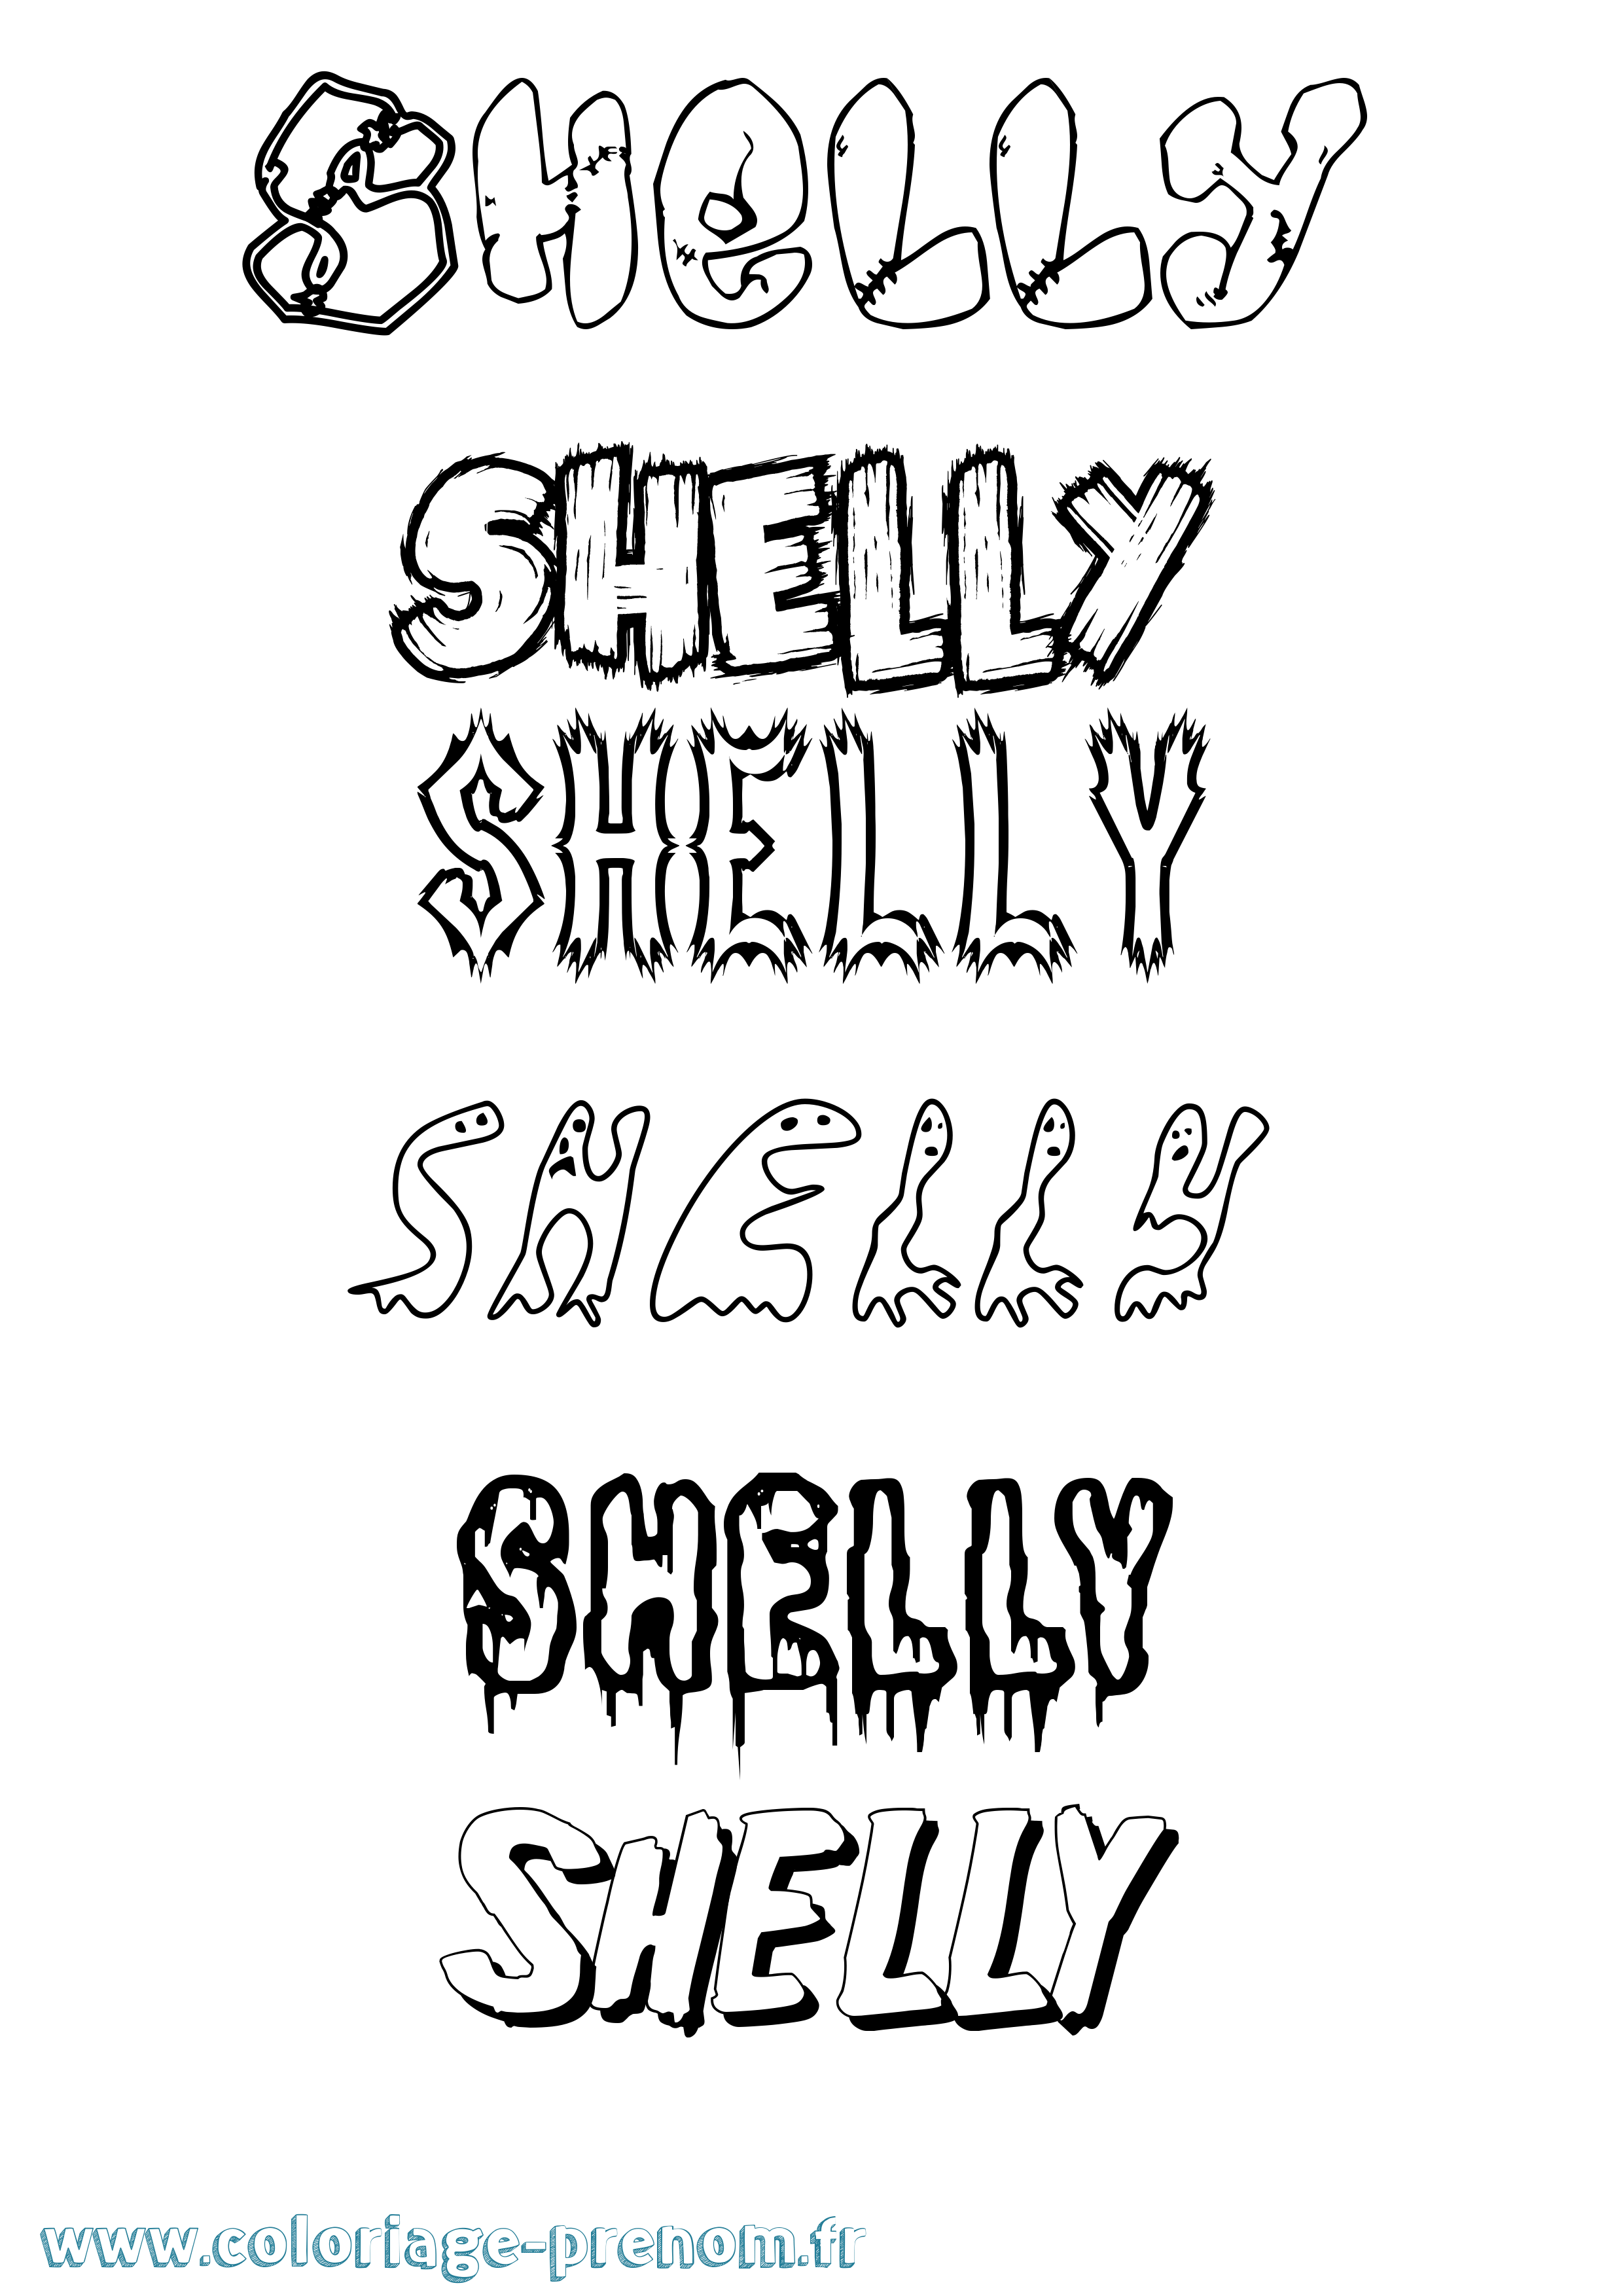 Coloriage prénom Shelly